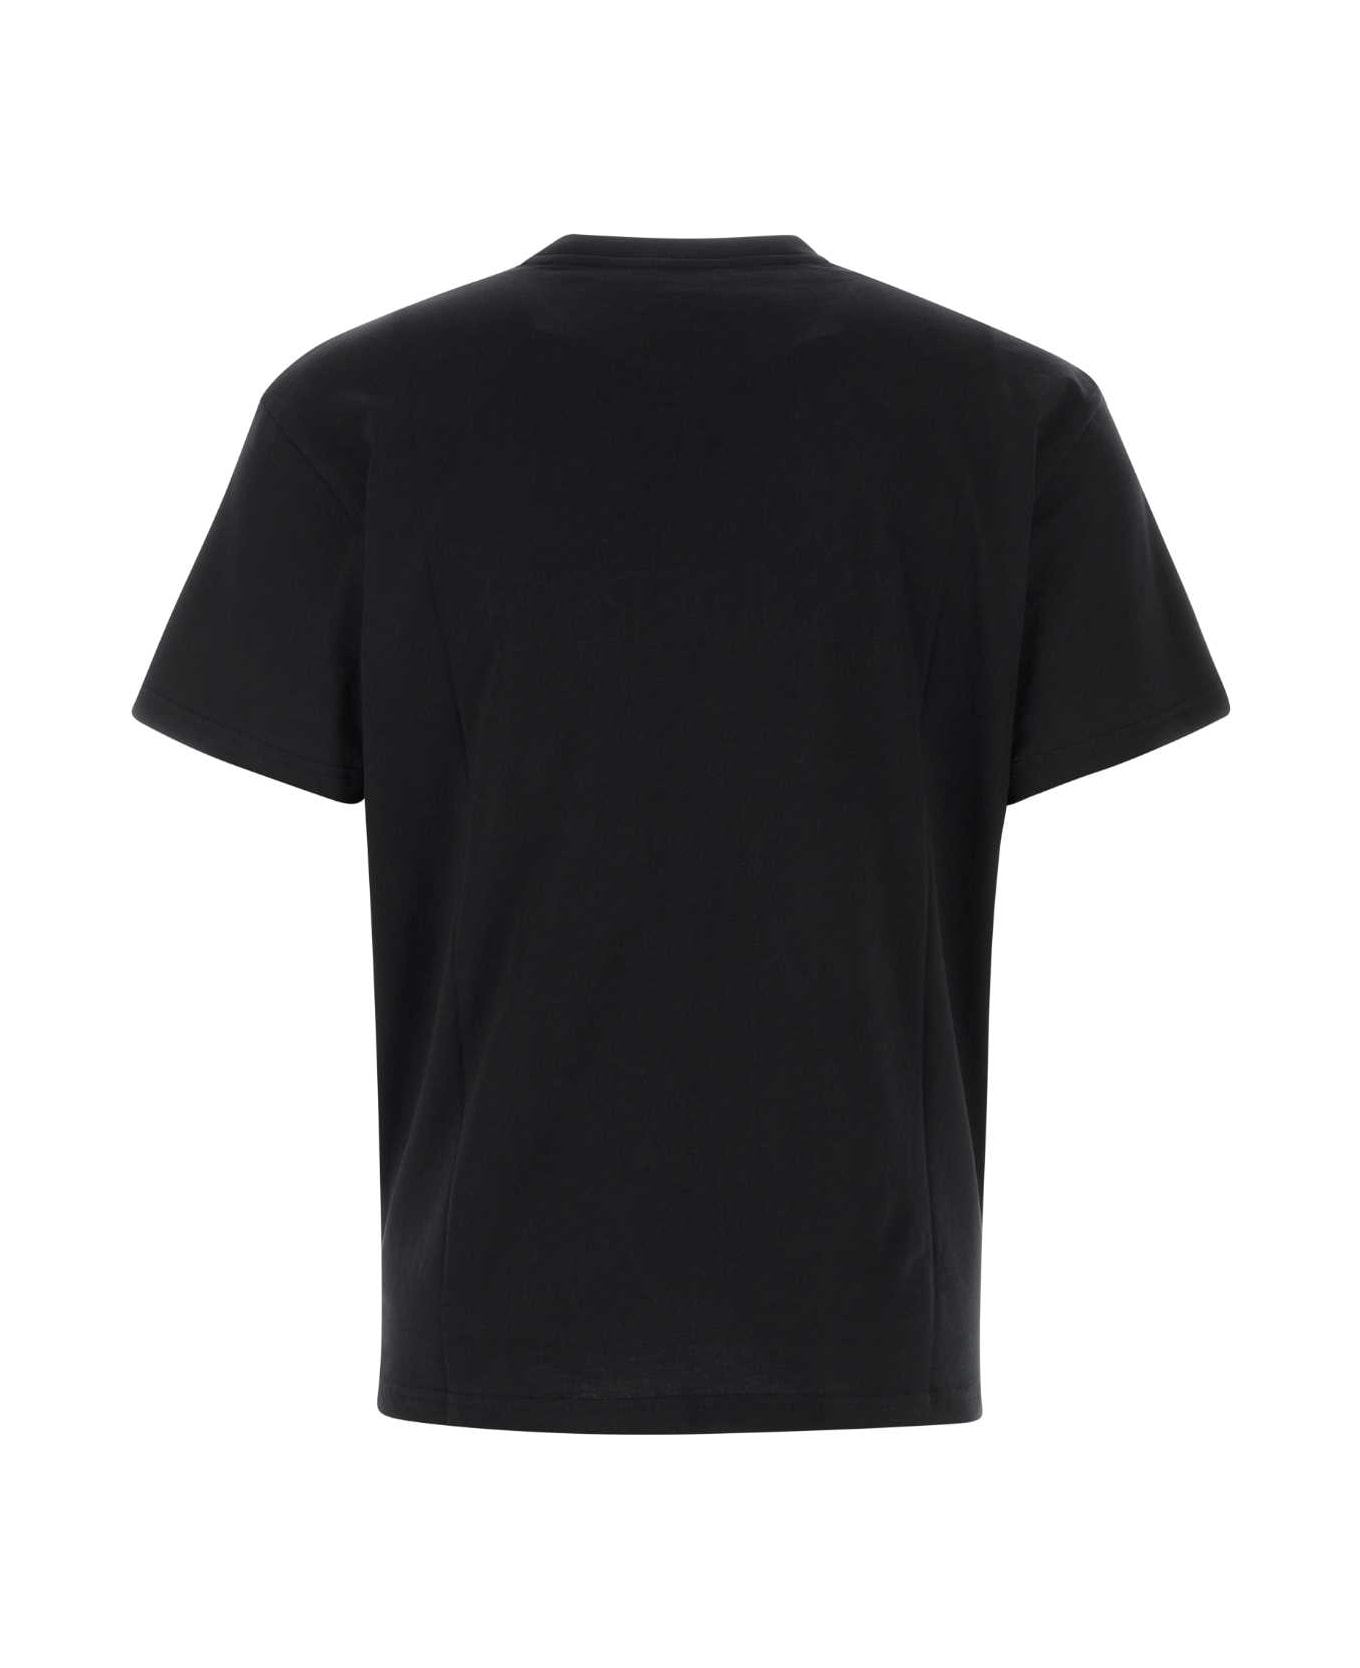 J.W. Anderson Black Cotton T-shirt - Black シャツ